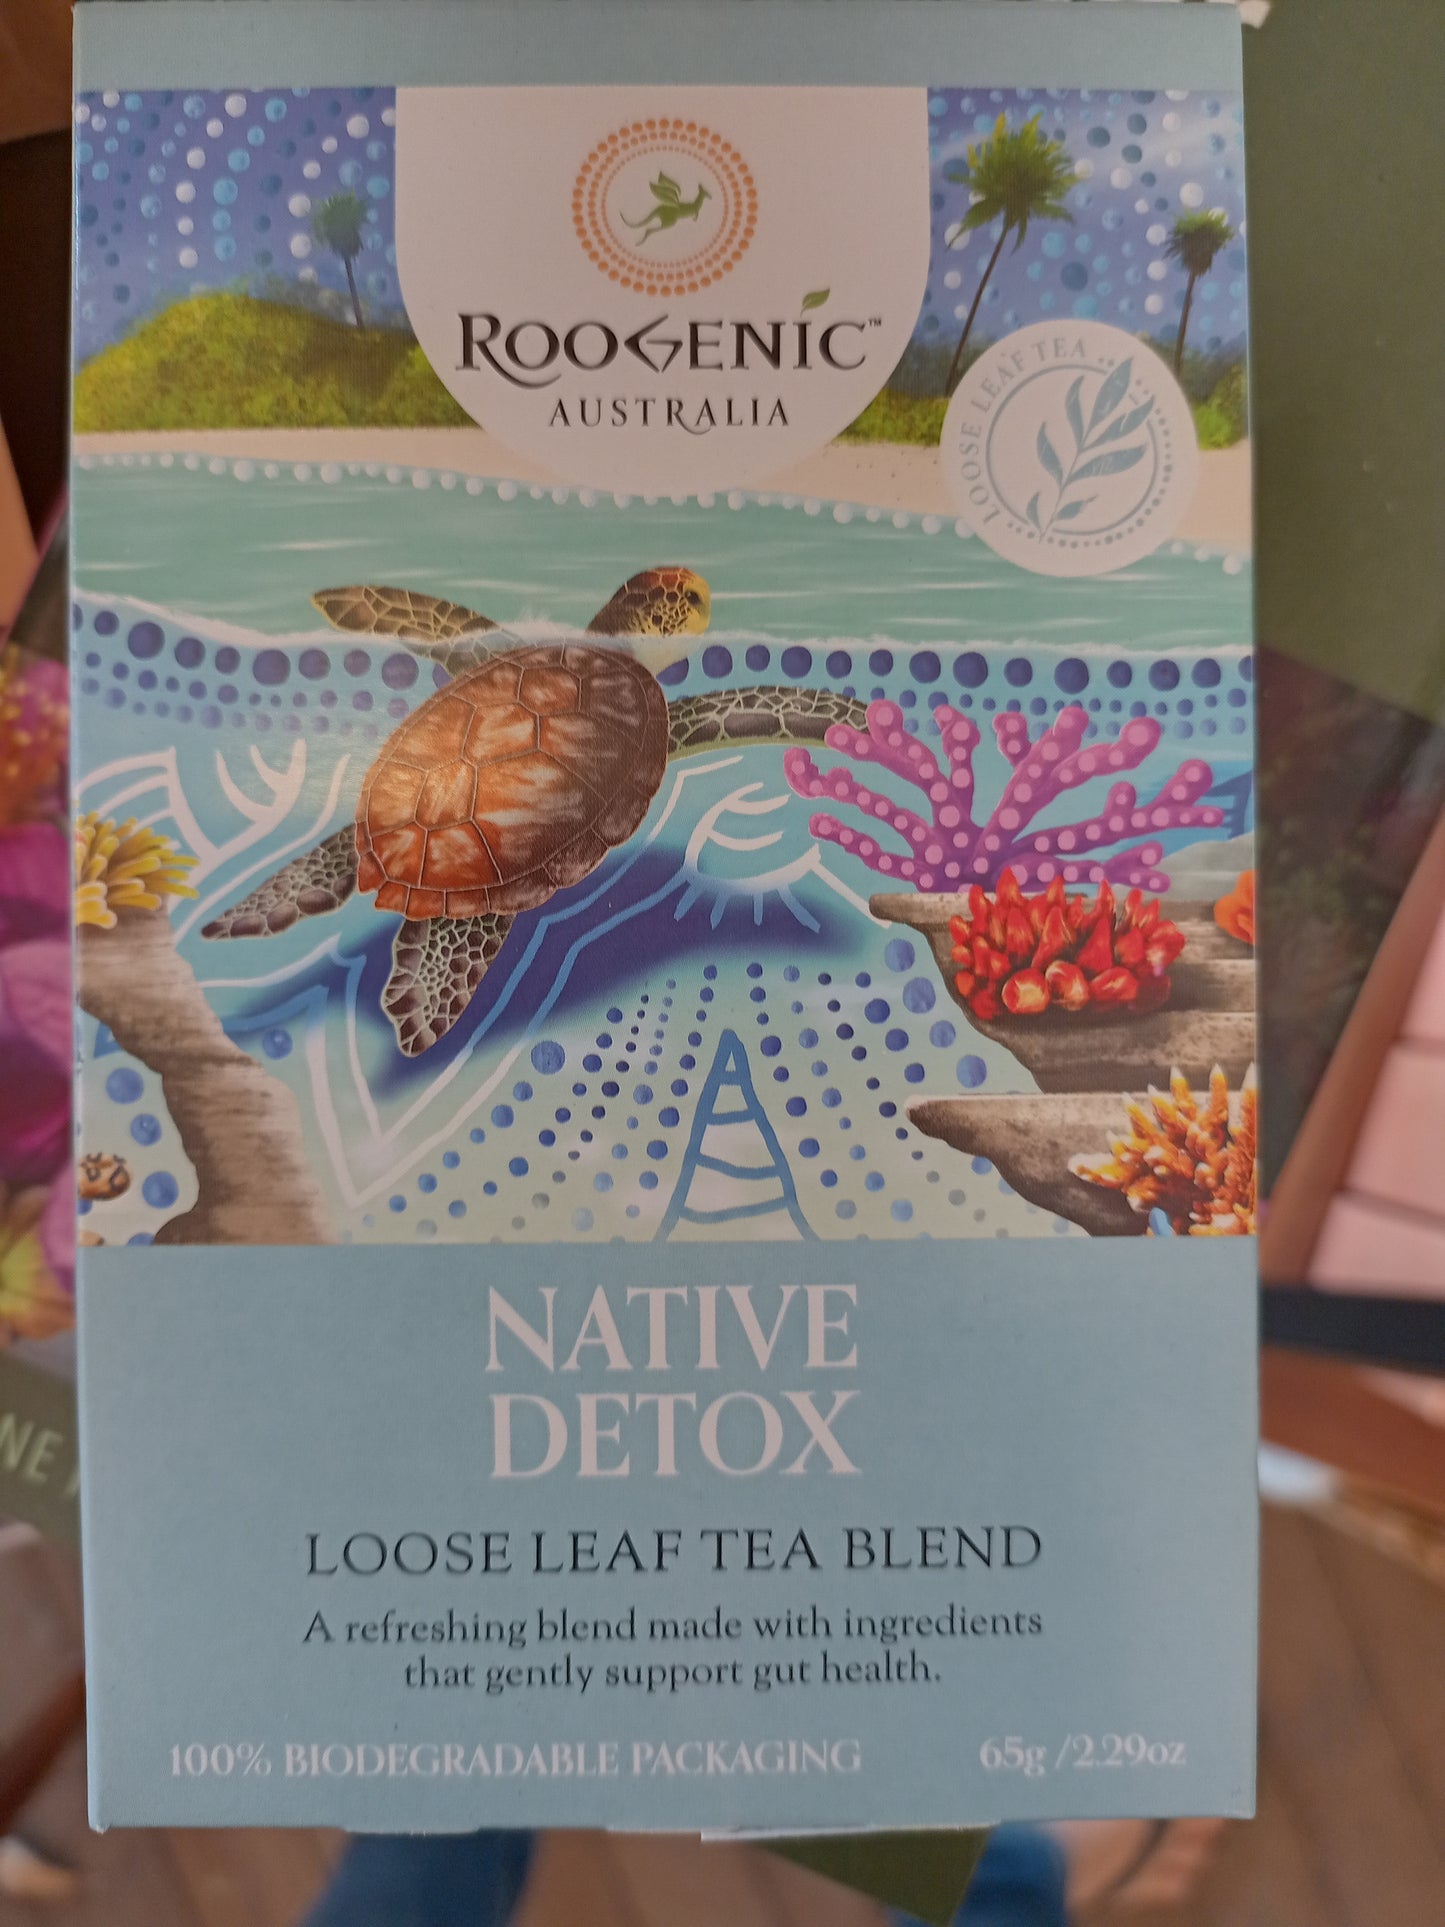 Roogenic - Native Detox